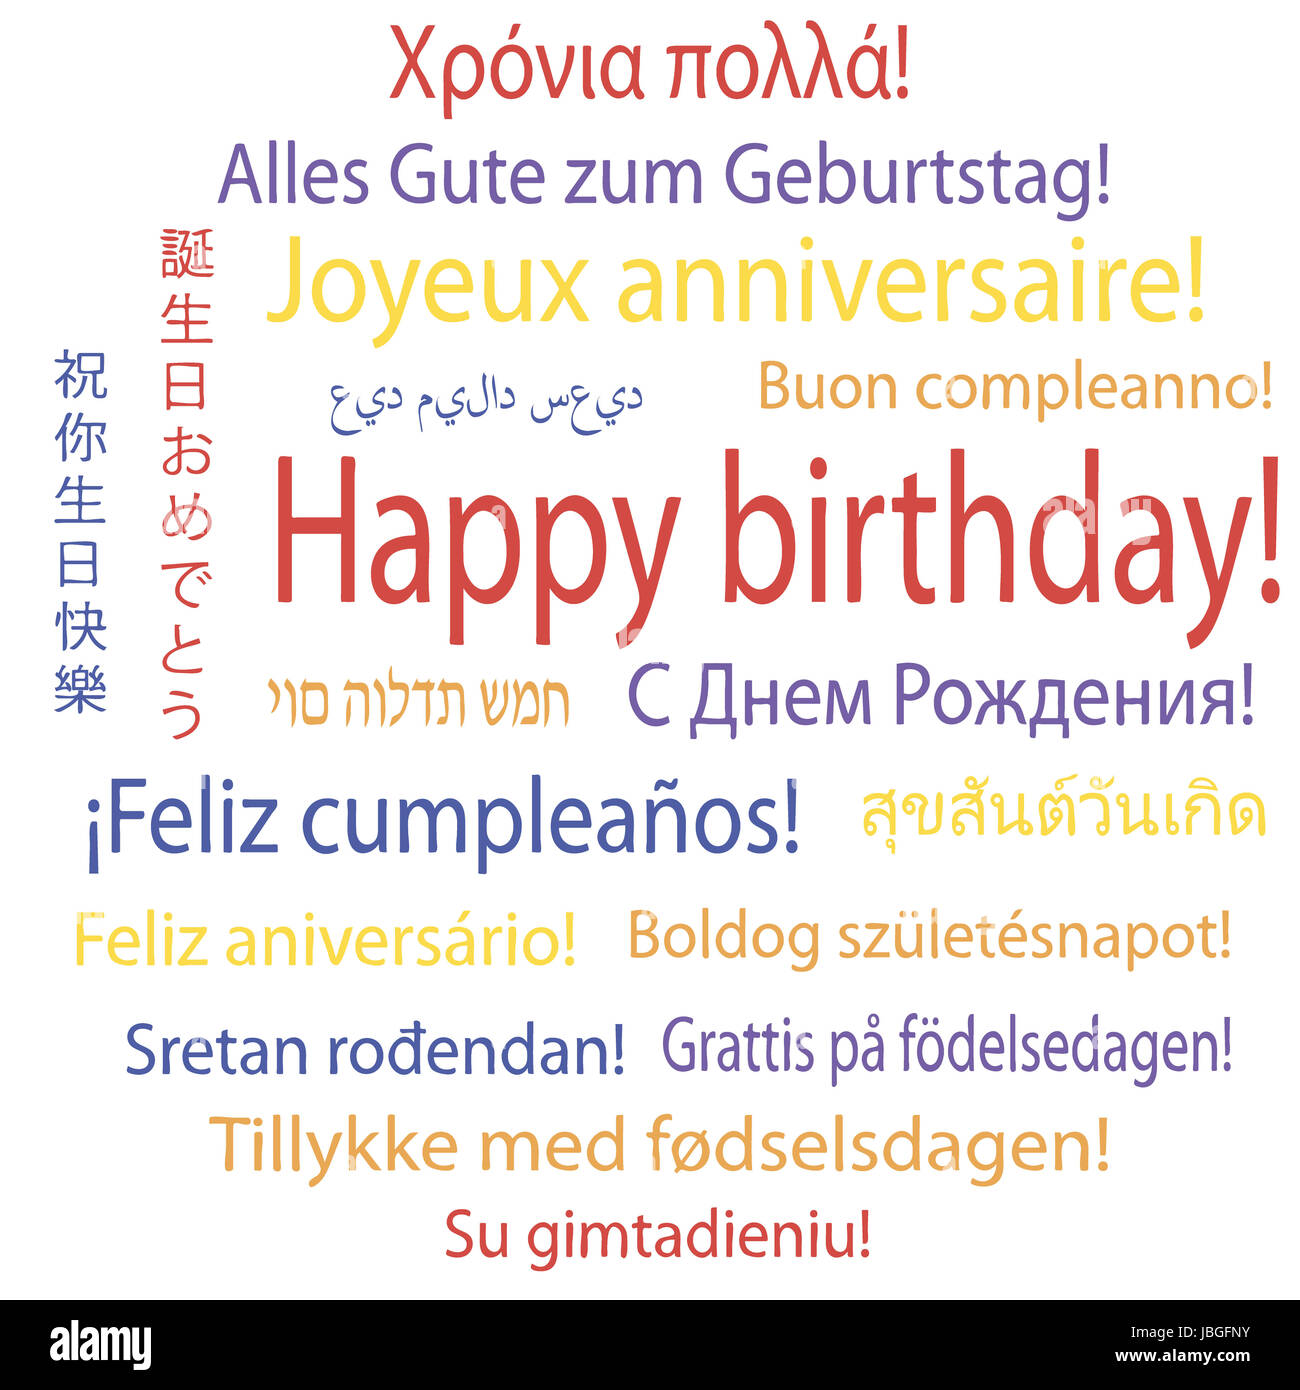 Happy birthday in many languages, vector illustration Stock Photo